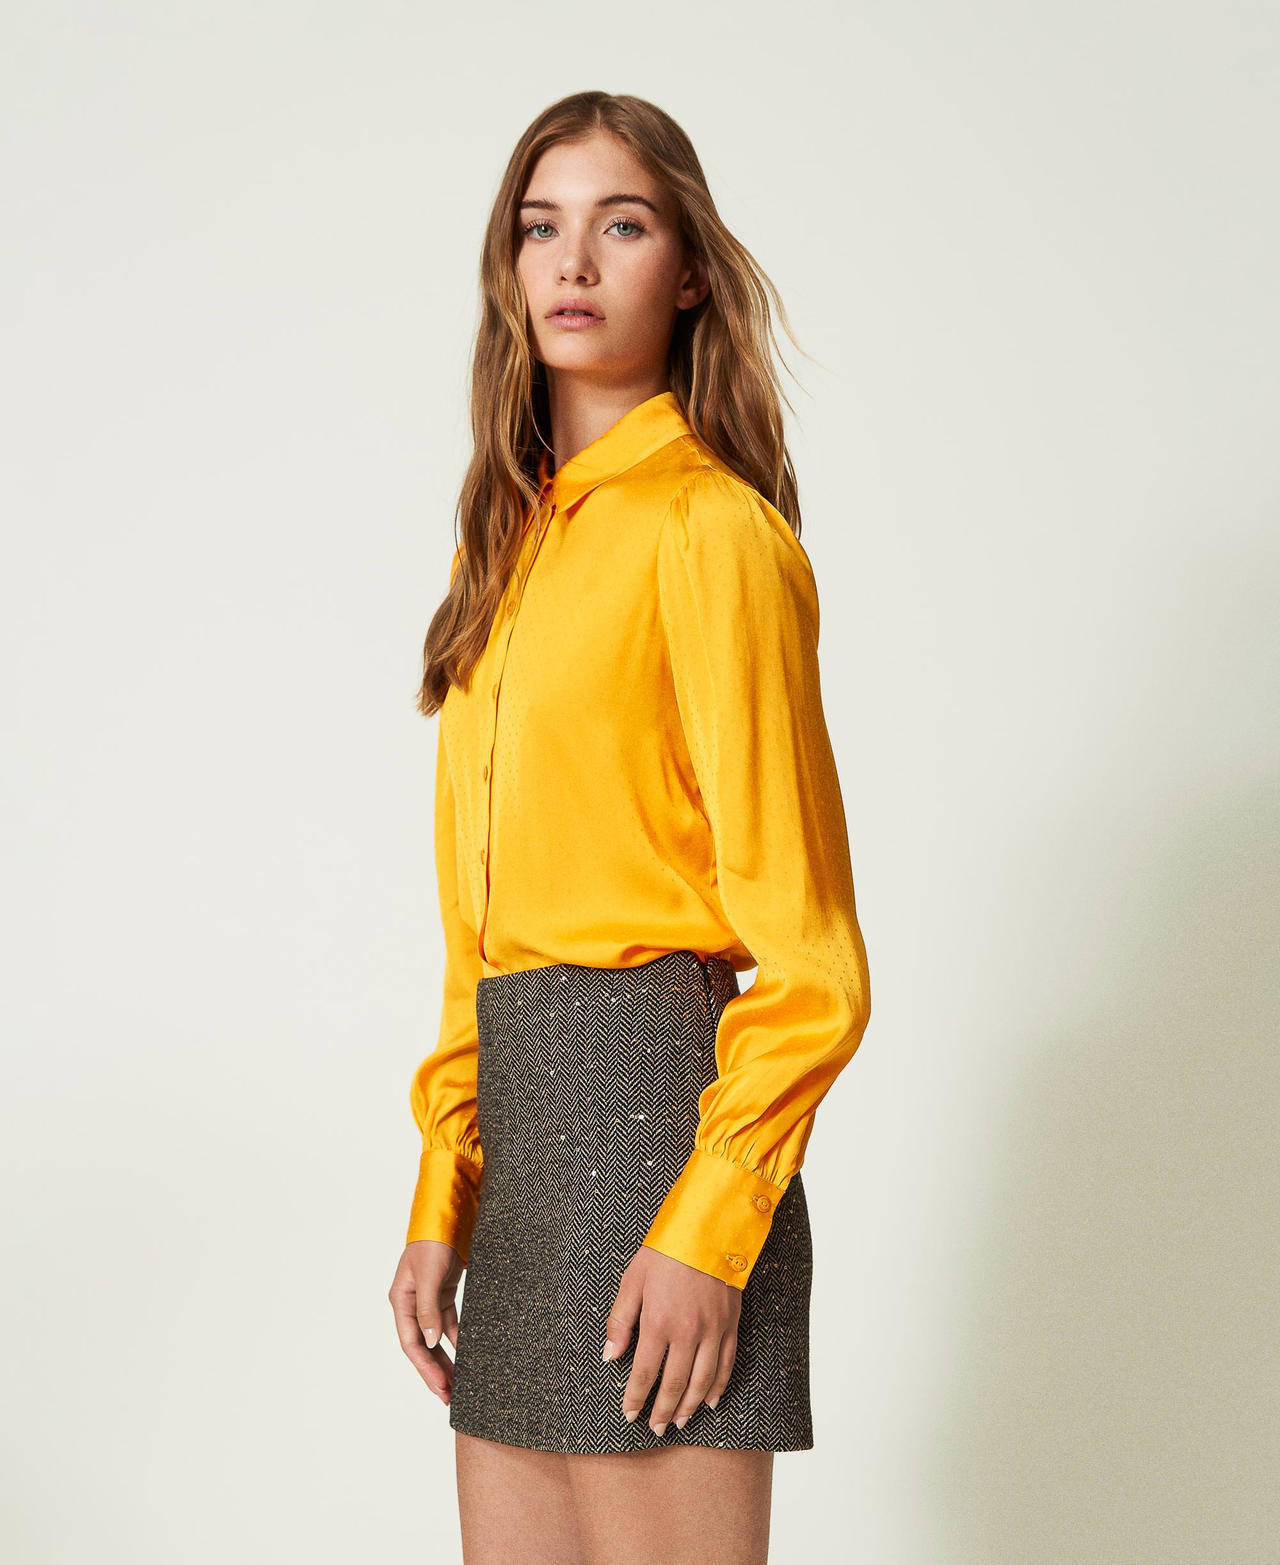 Polka dot jacquard shirt "Radiant Yellow" Woman 232TT2173-02